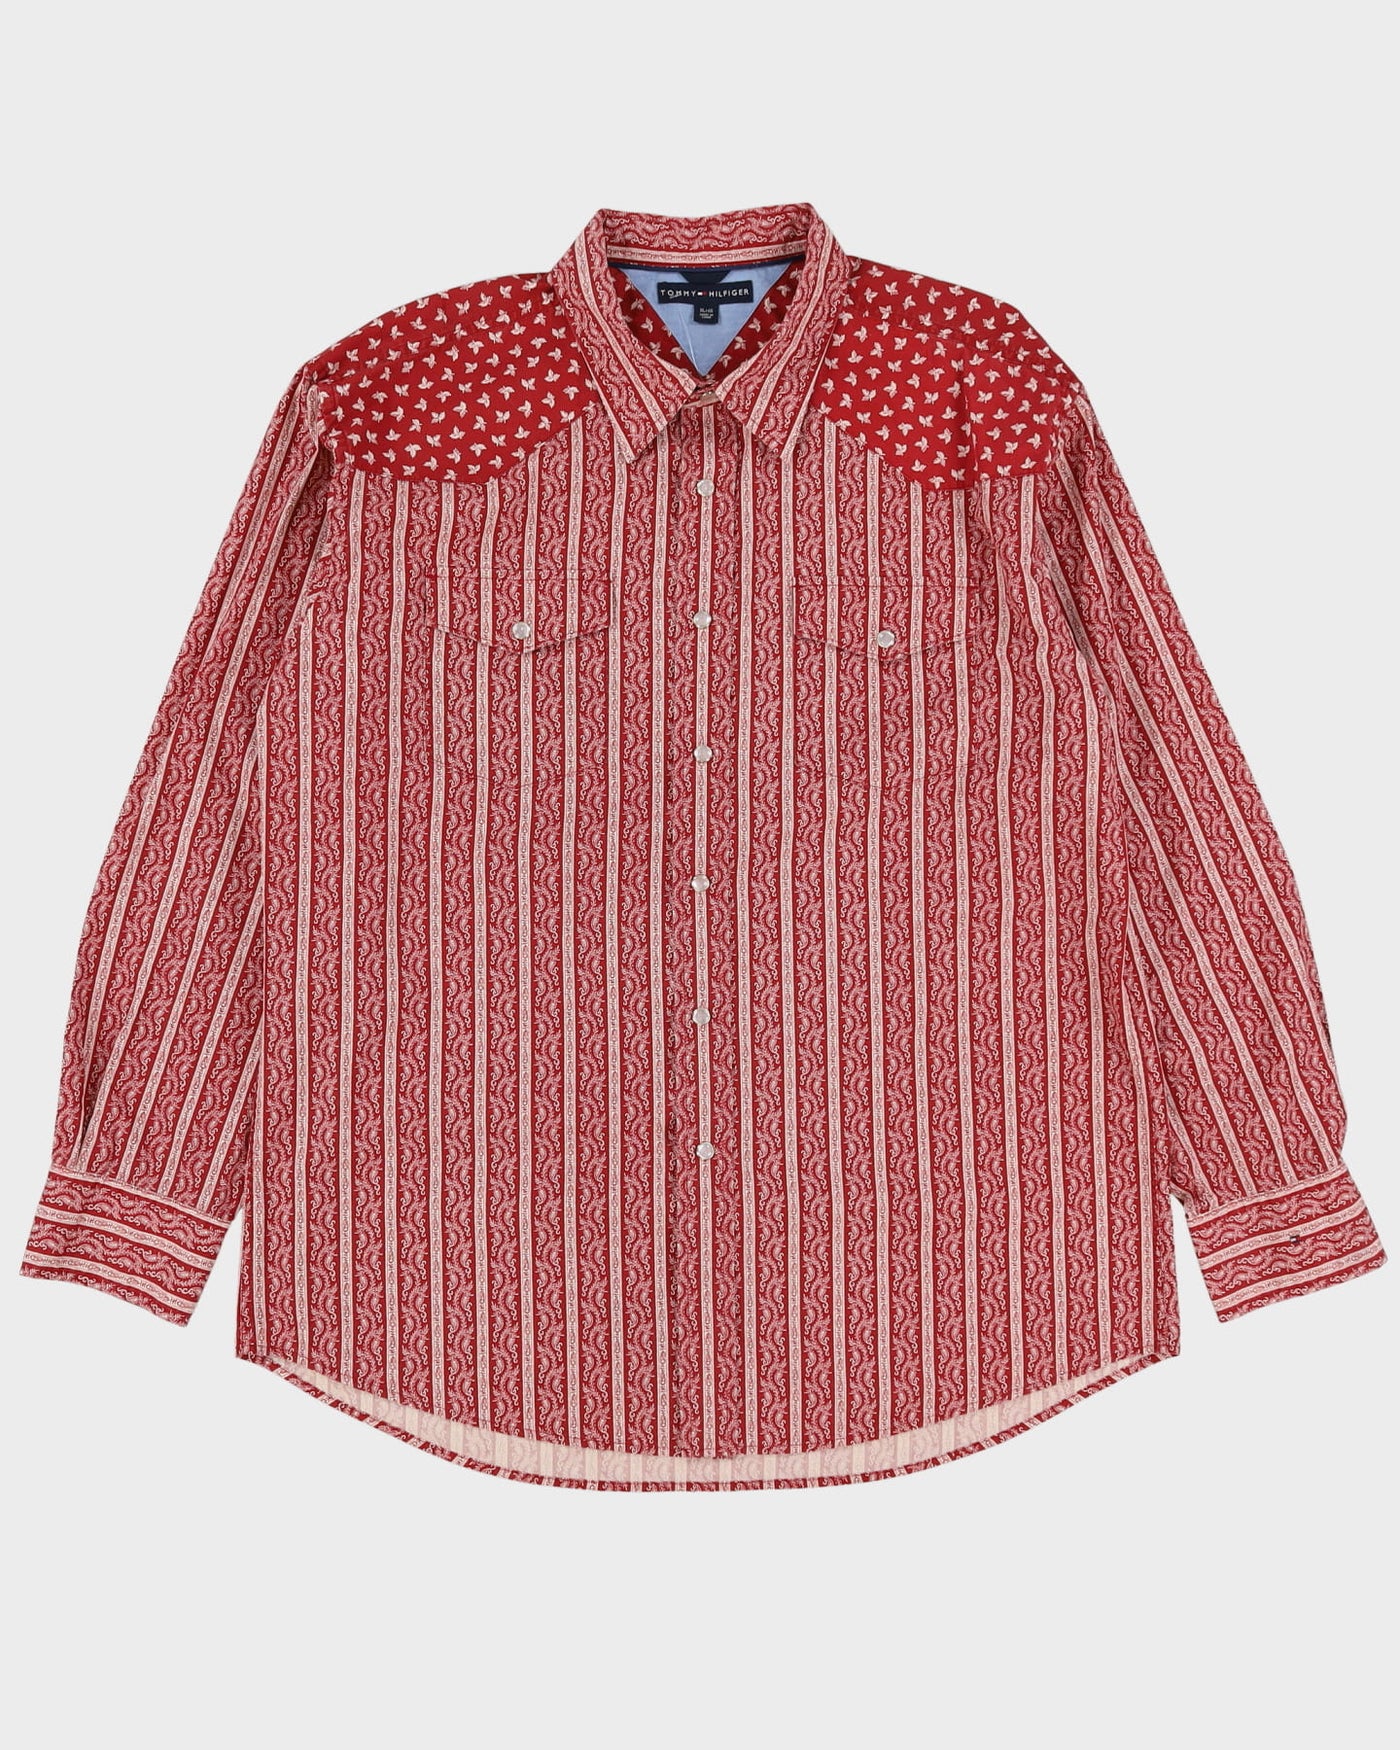 Vintage Tommy Hilfiger Red Western Shirt - XL